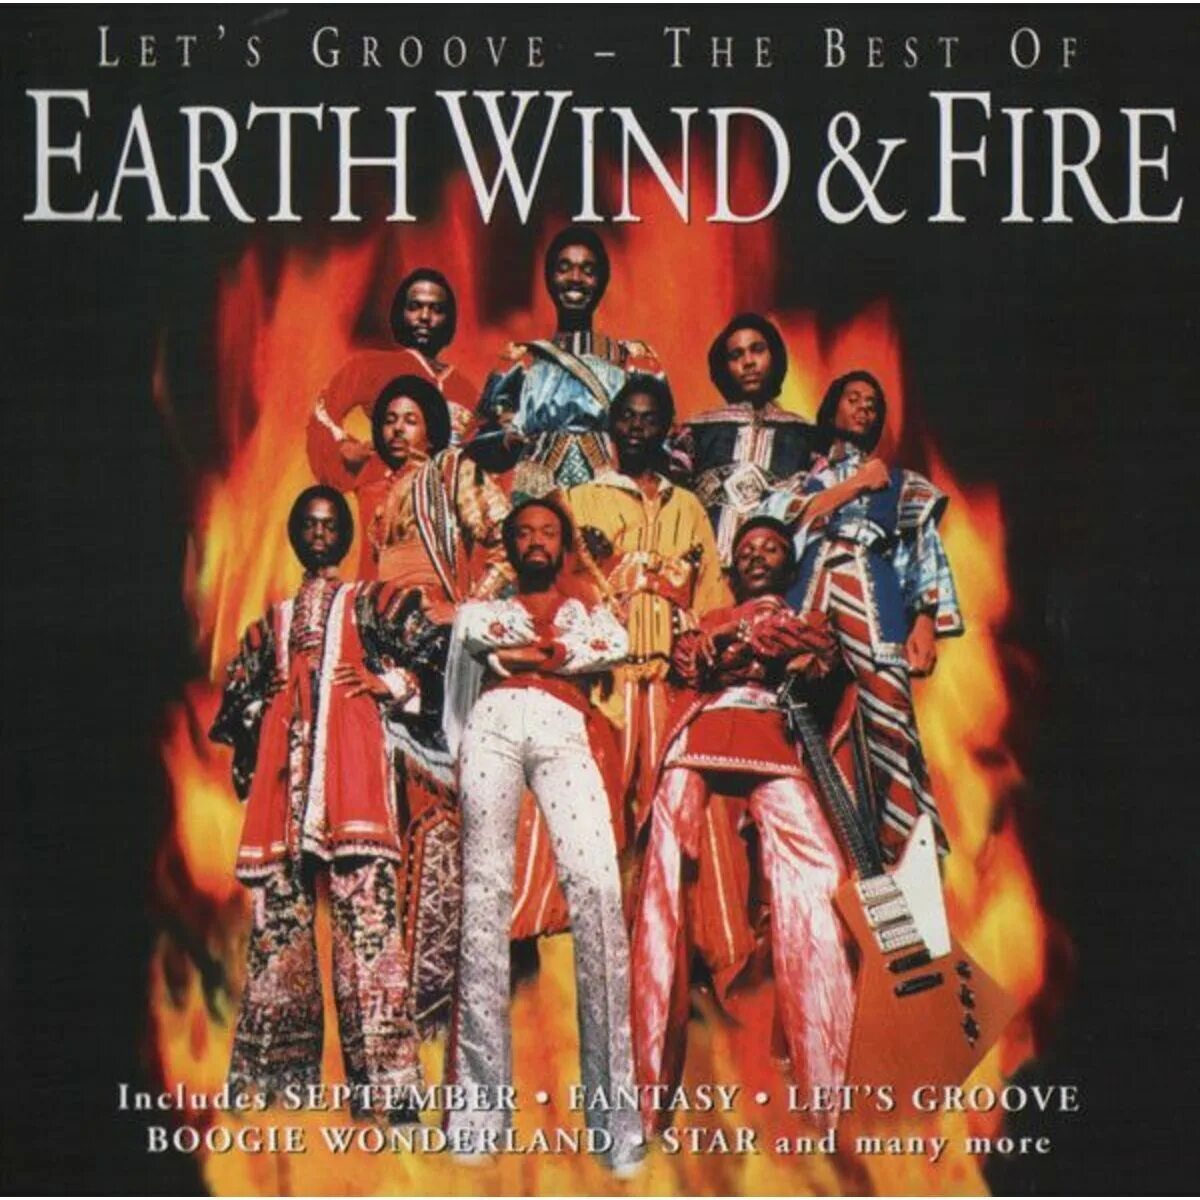 Lets me fire. Let's Groove Earth Wind Fire обложка. Earth, Wind & Fire. September Earth Wind Fire. Земля ветер огонь группа.